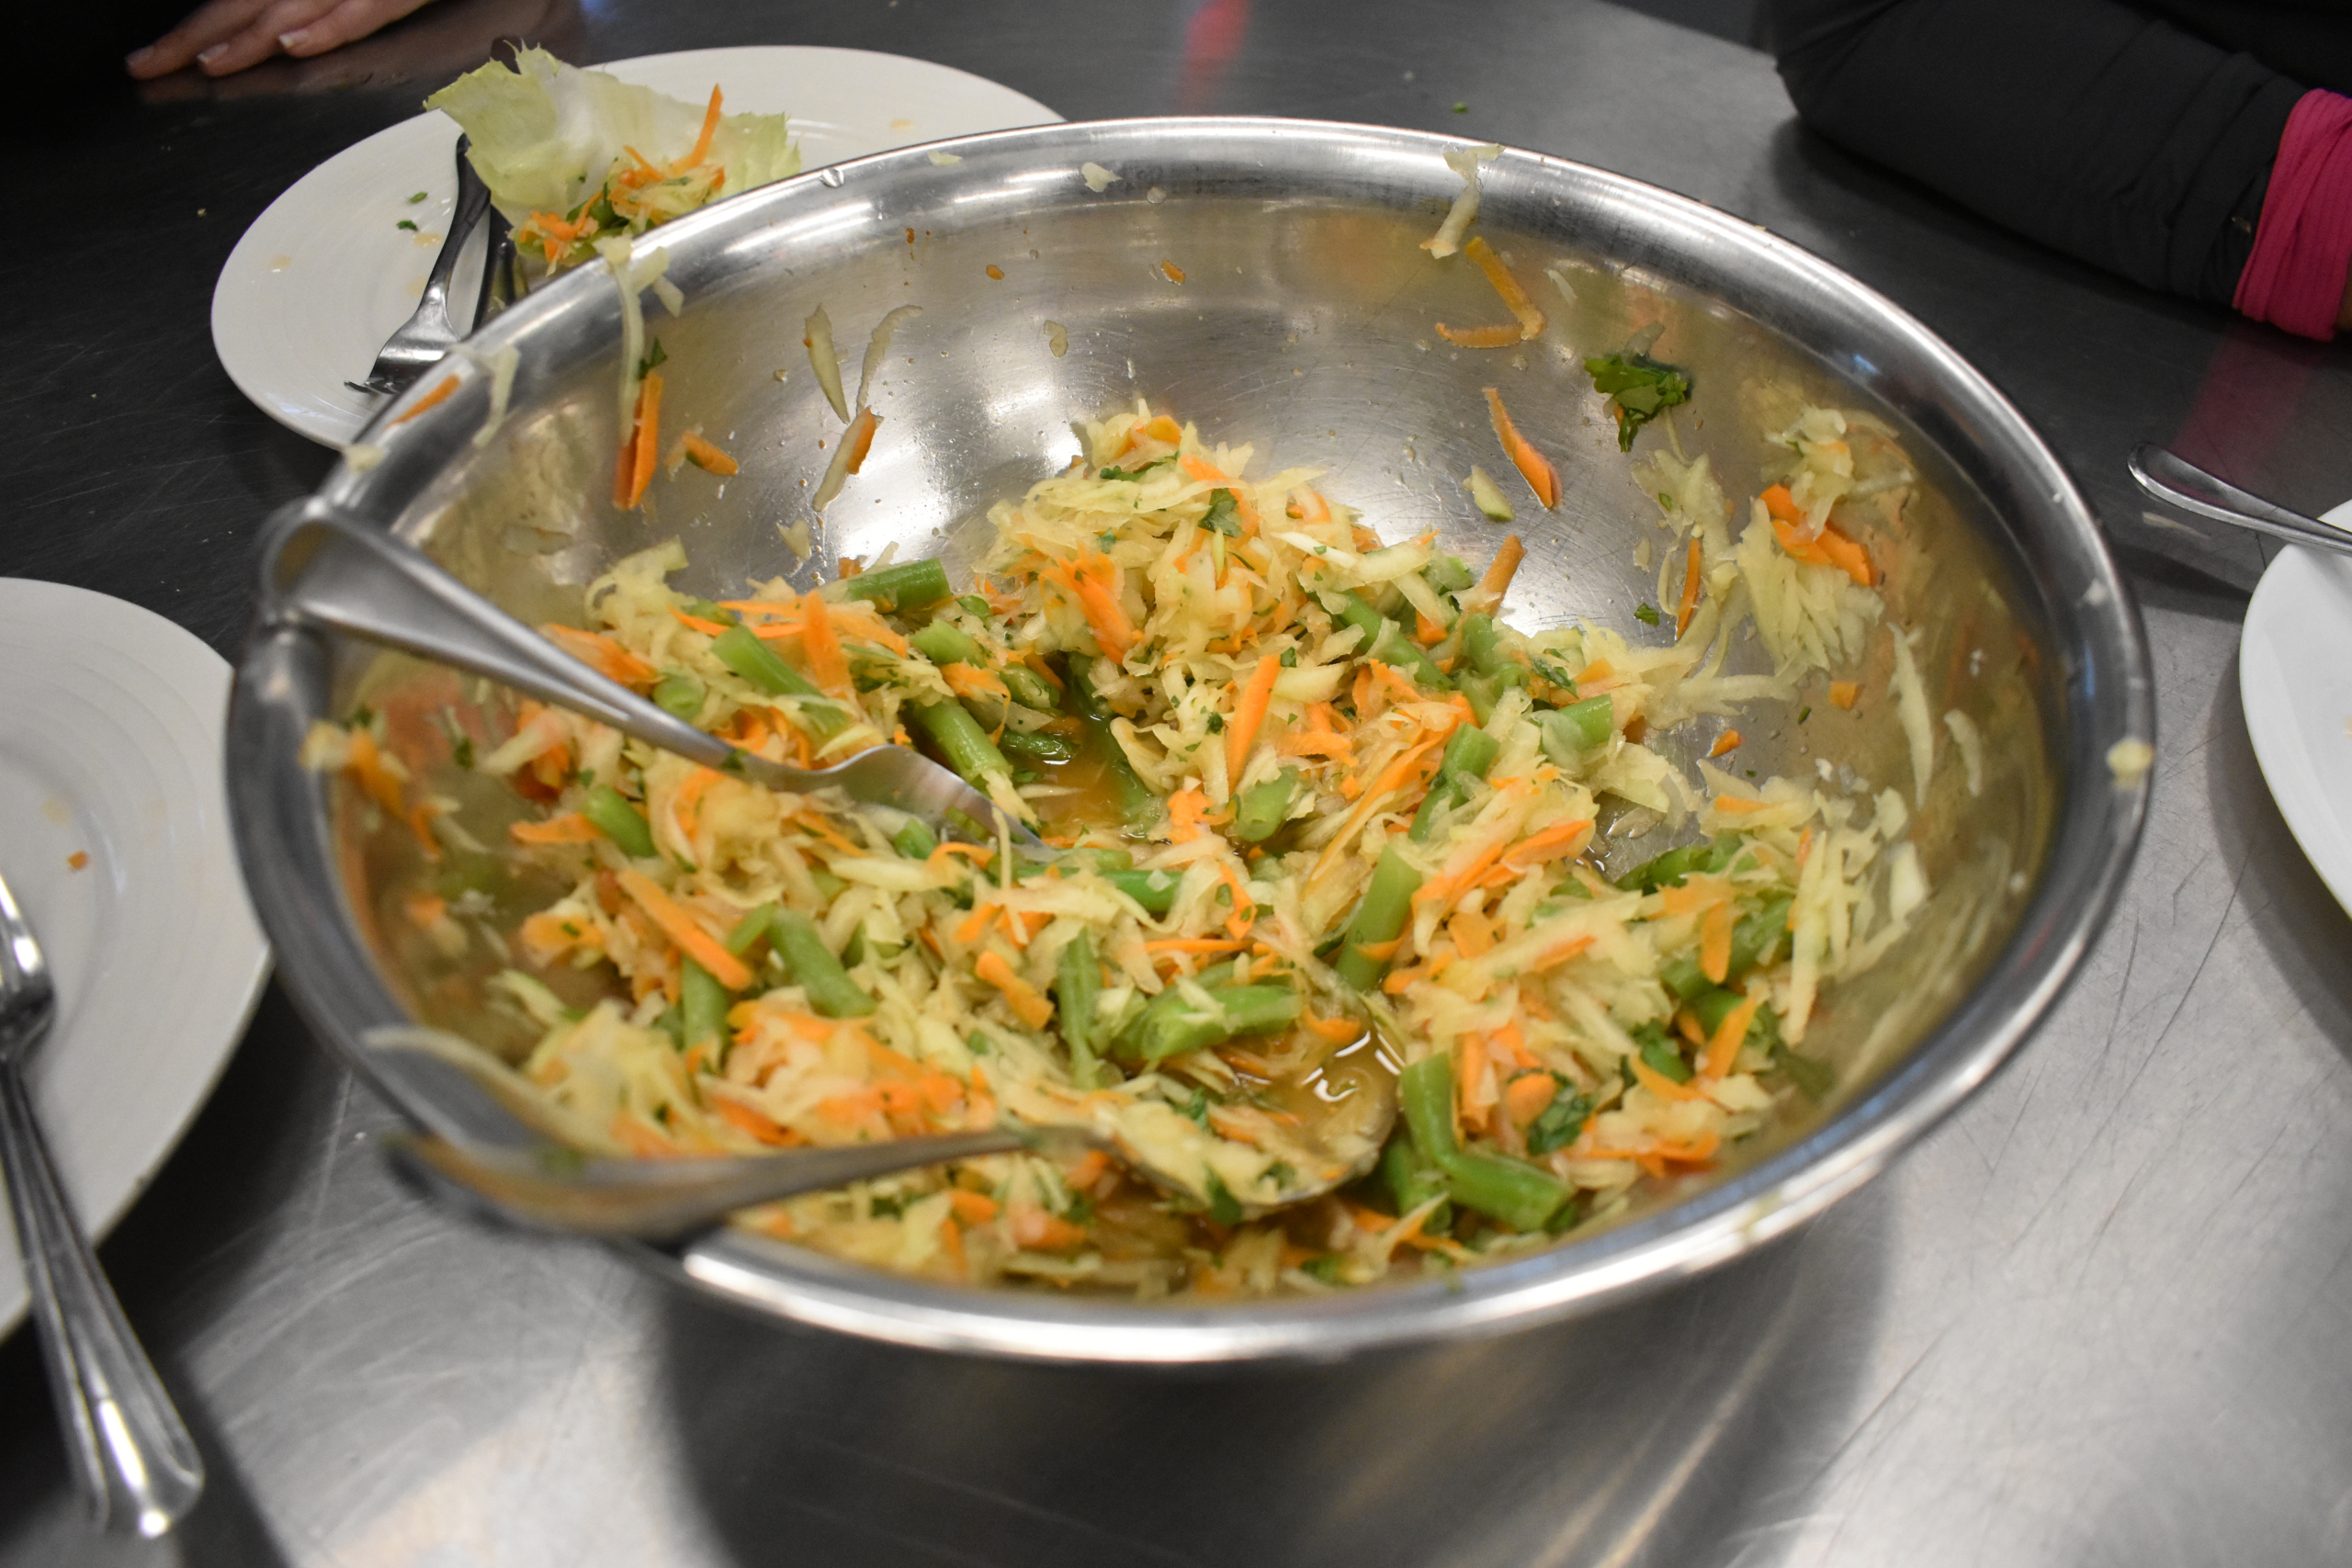 Cooking Class Feeding South Florida Green Papaya Salad and Curry - the Green Papaya Salad